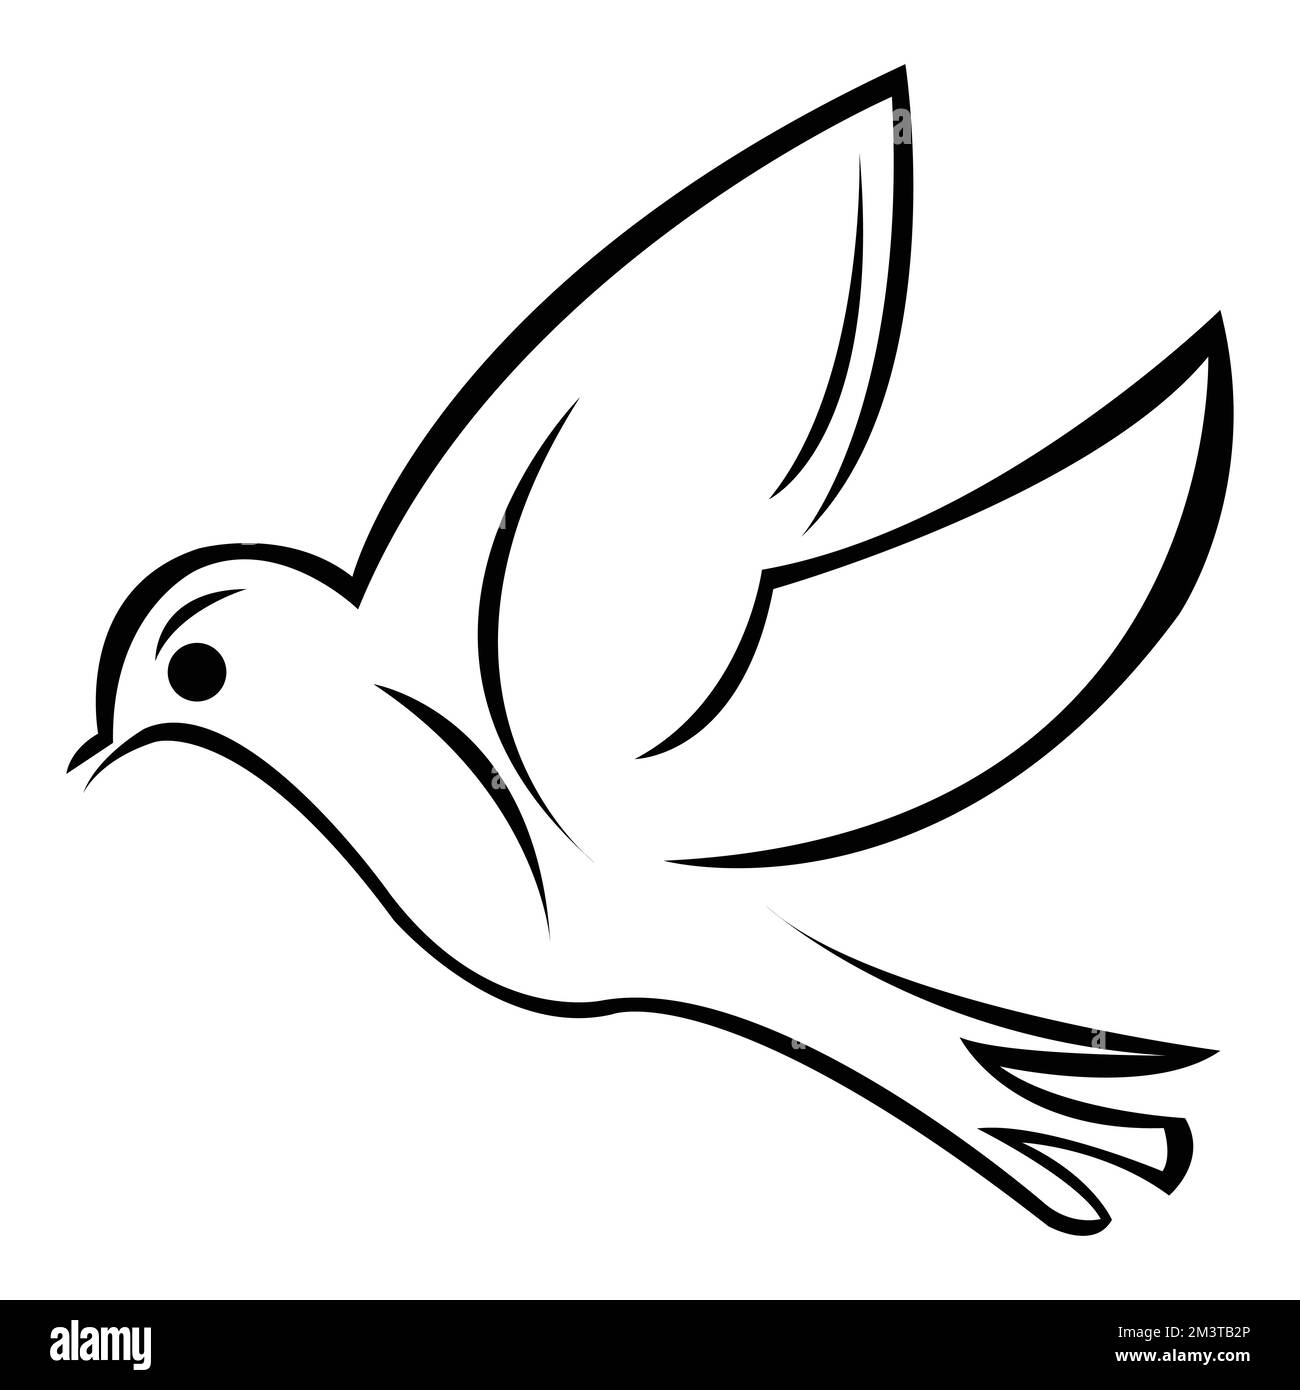 Modello con logo Bird con stile art. Creative abstract Bird logo collection.EPS 10 Illustrazione Vettoriale